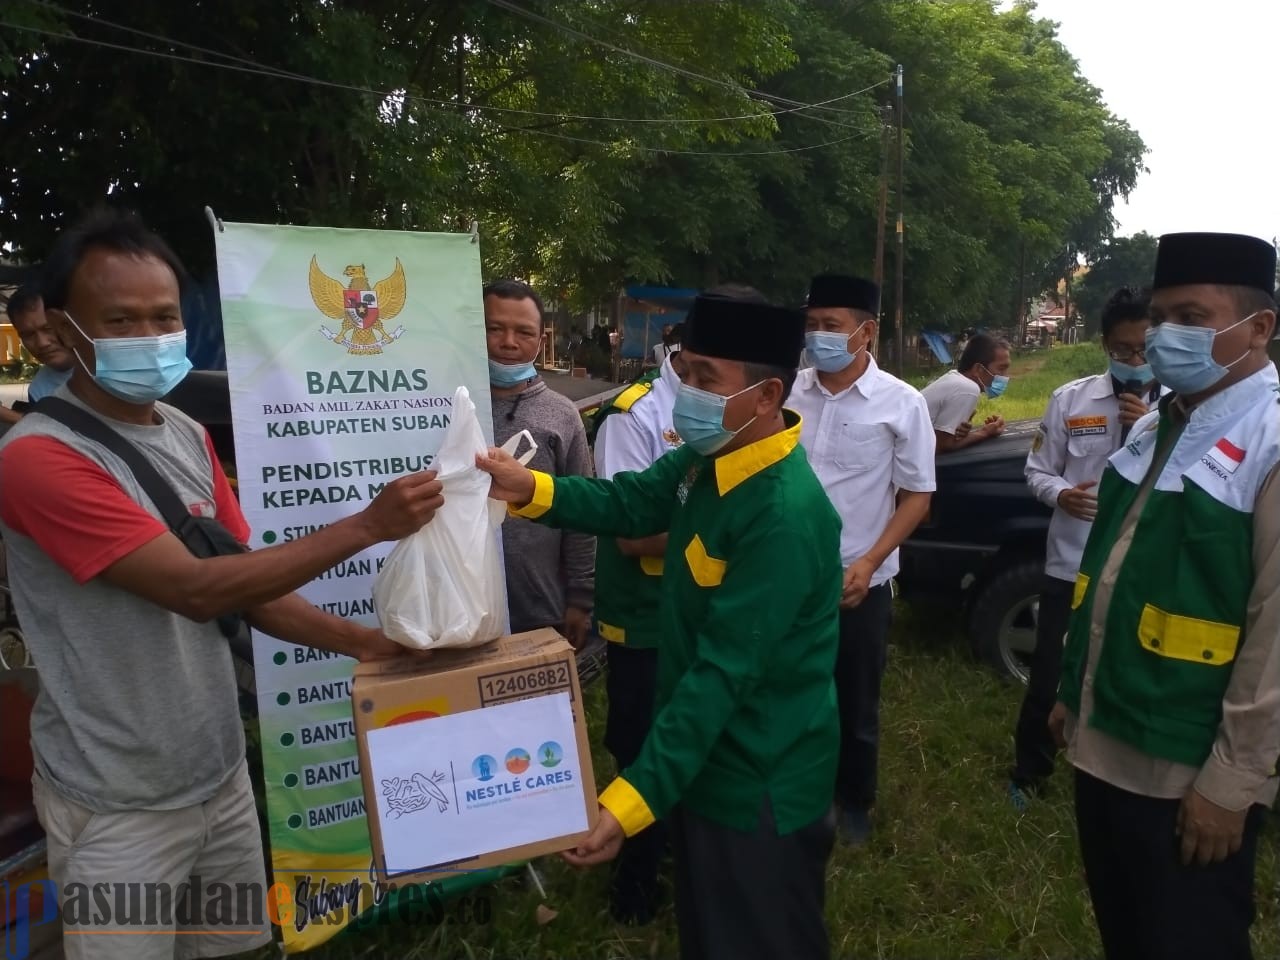 Baznas Kabupaten Subang Santuni 117 Tukang Becak